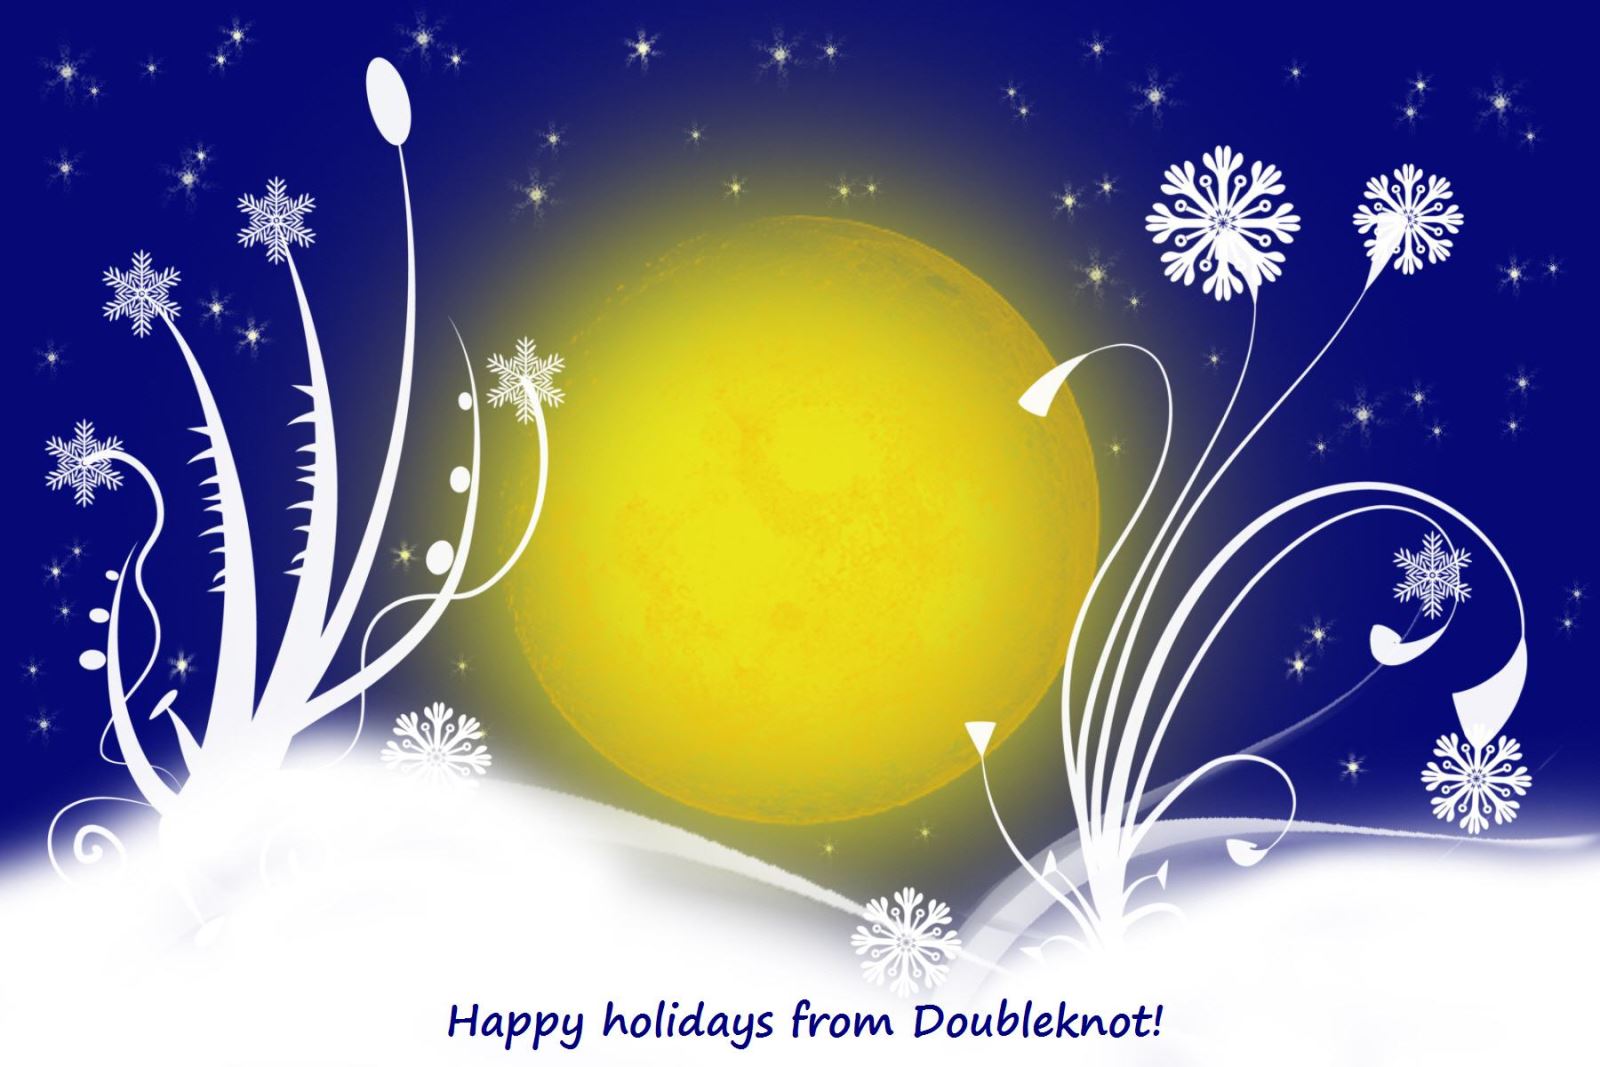 Happy holidays from Doubleknot!